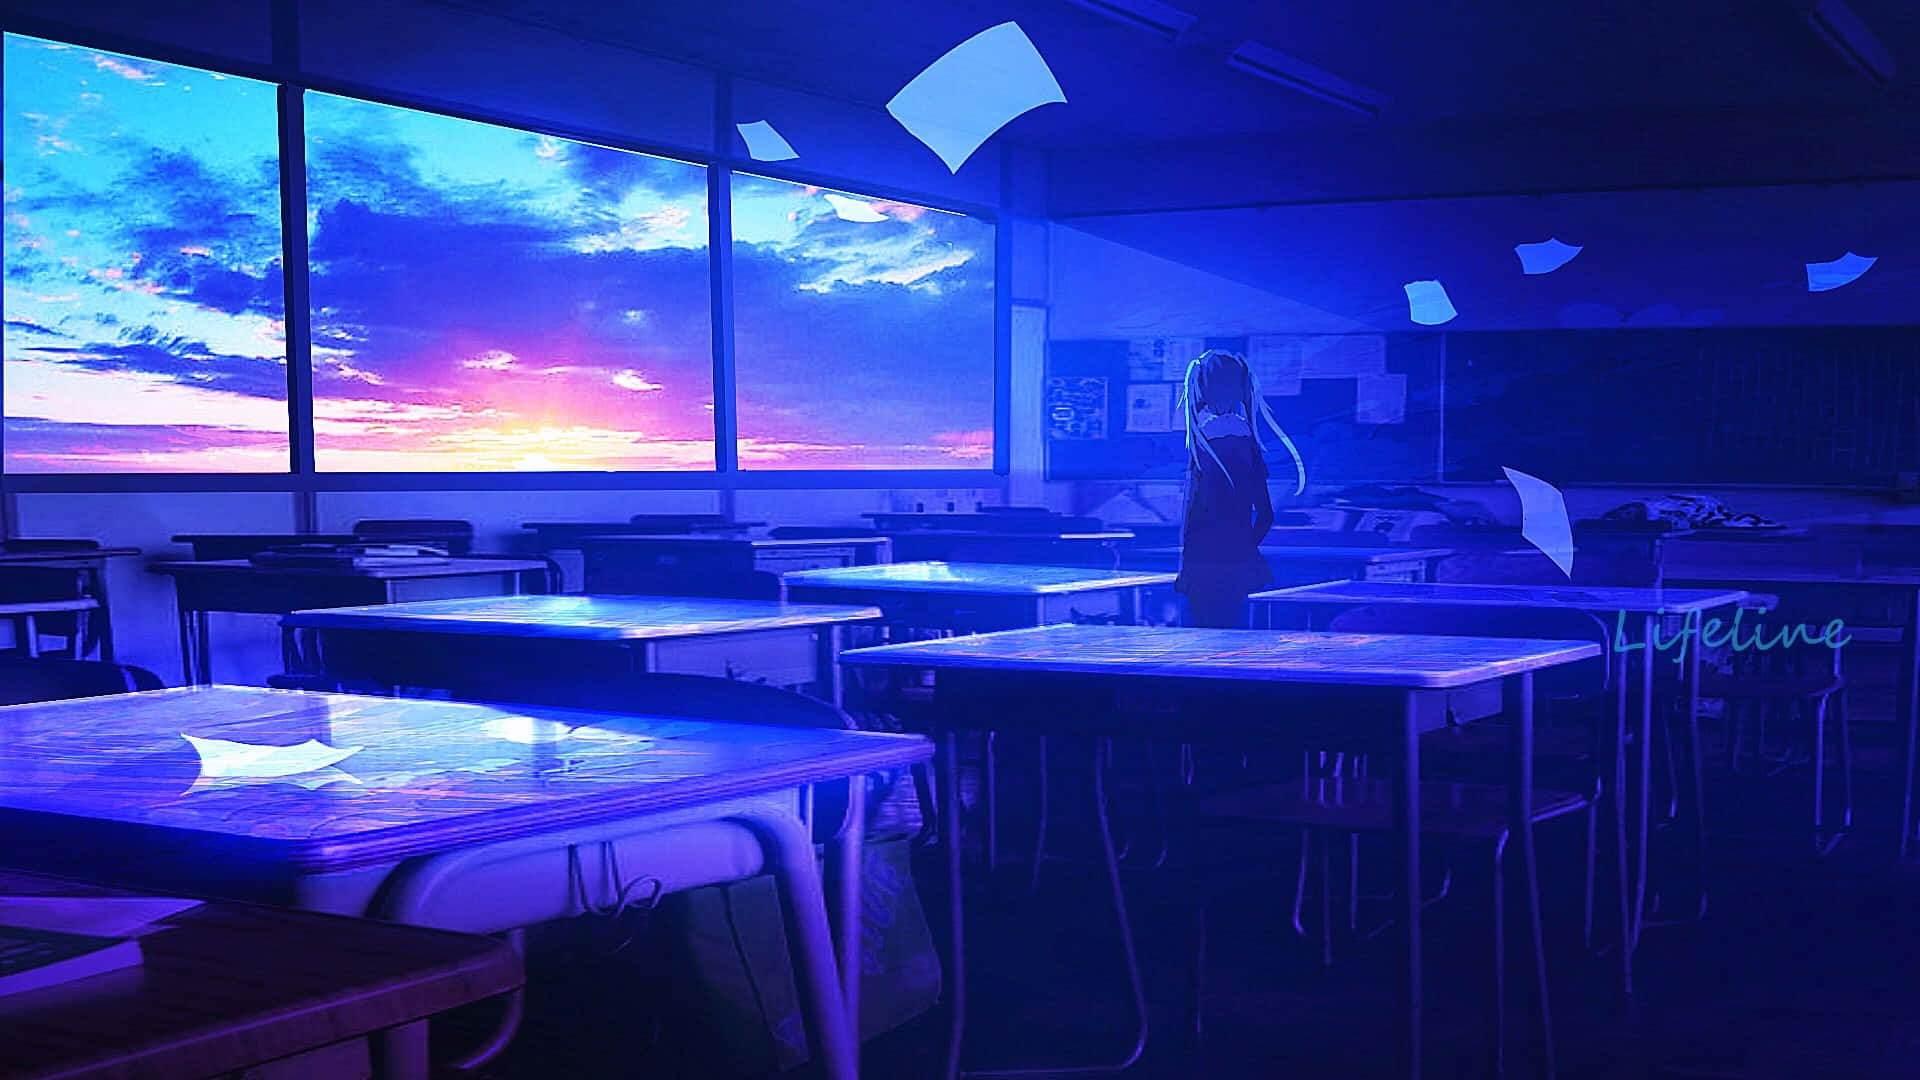 A Classroom With A Blue Sky